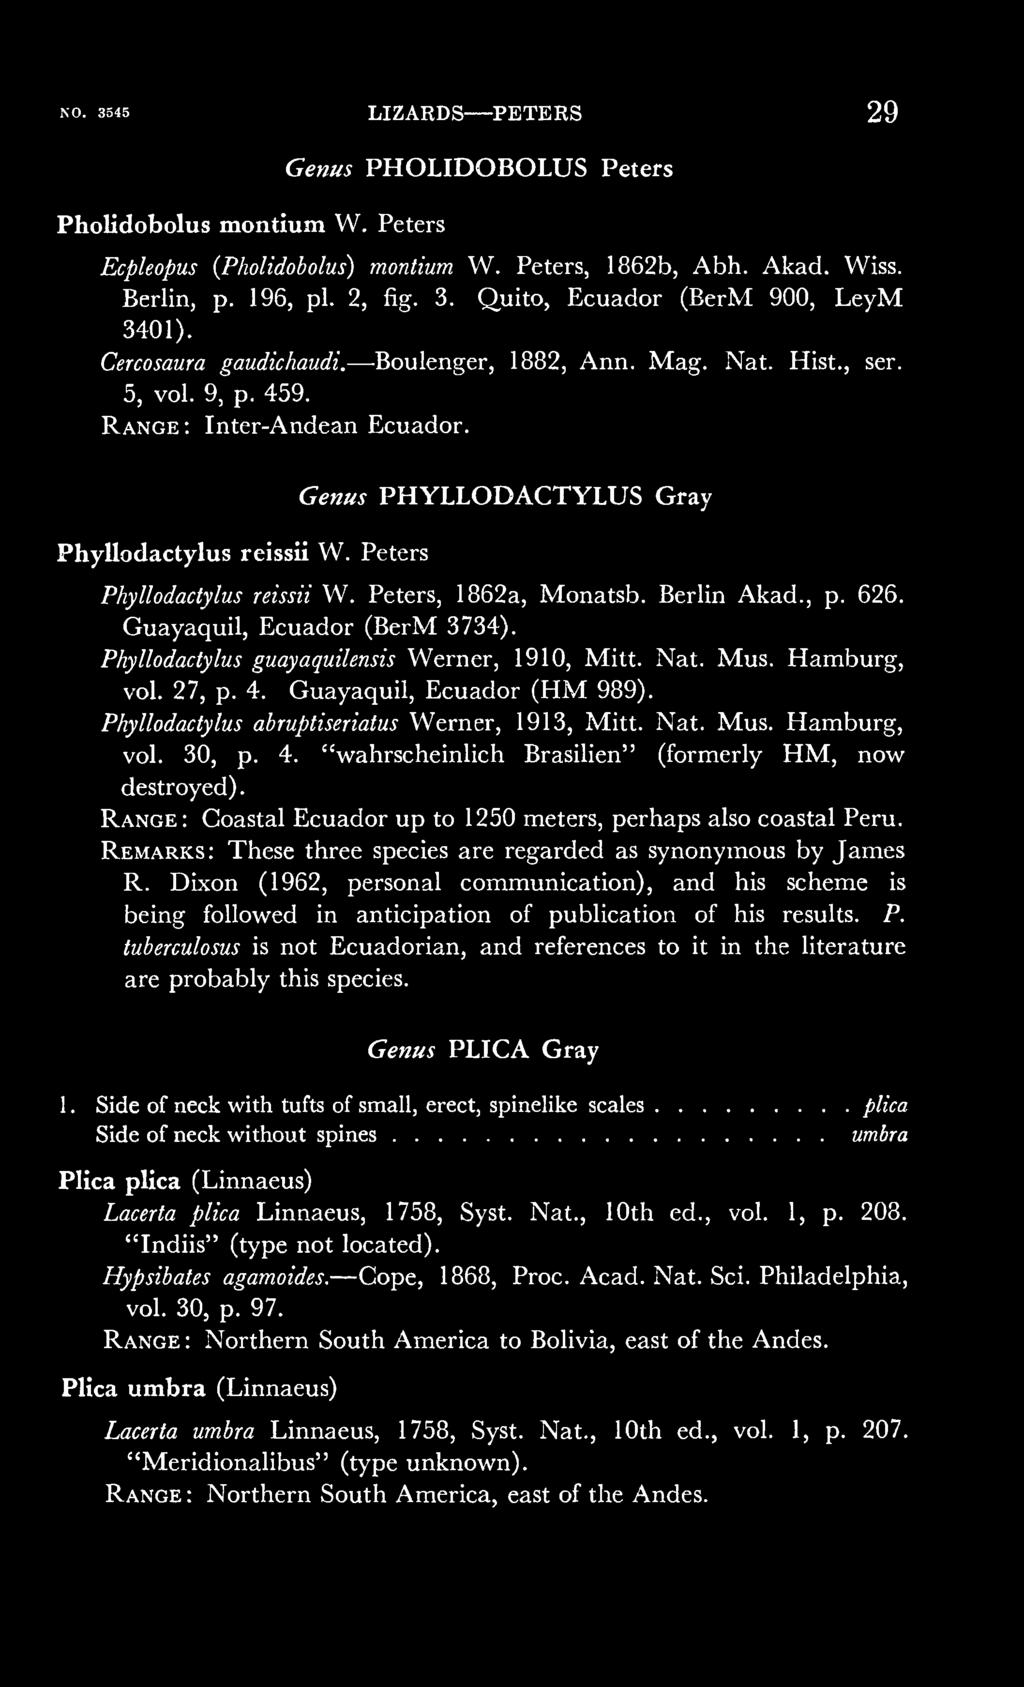 Peters, 1862a, Monatsb. Berlin Akad., p. 626. Guayaquil, Ecuador (BerM 3734). Phyllodactylus guayaquilensis Werner, 1910, Mitt. Nat. Mus. Hamburg, vol. 27, p. 4. Guayaquil, Ecuador (HM 989).